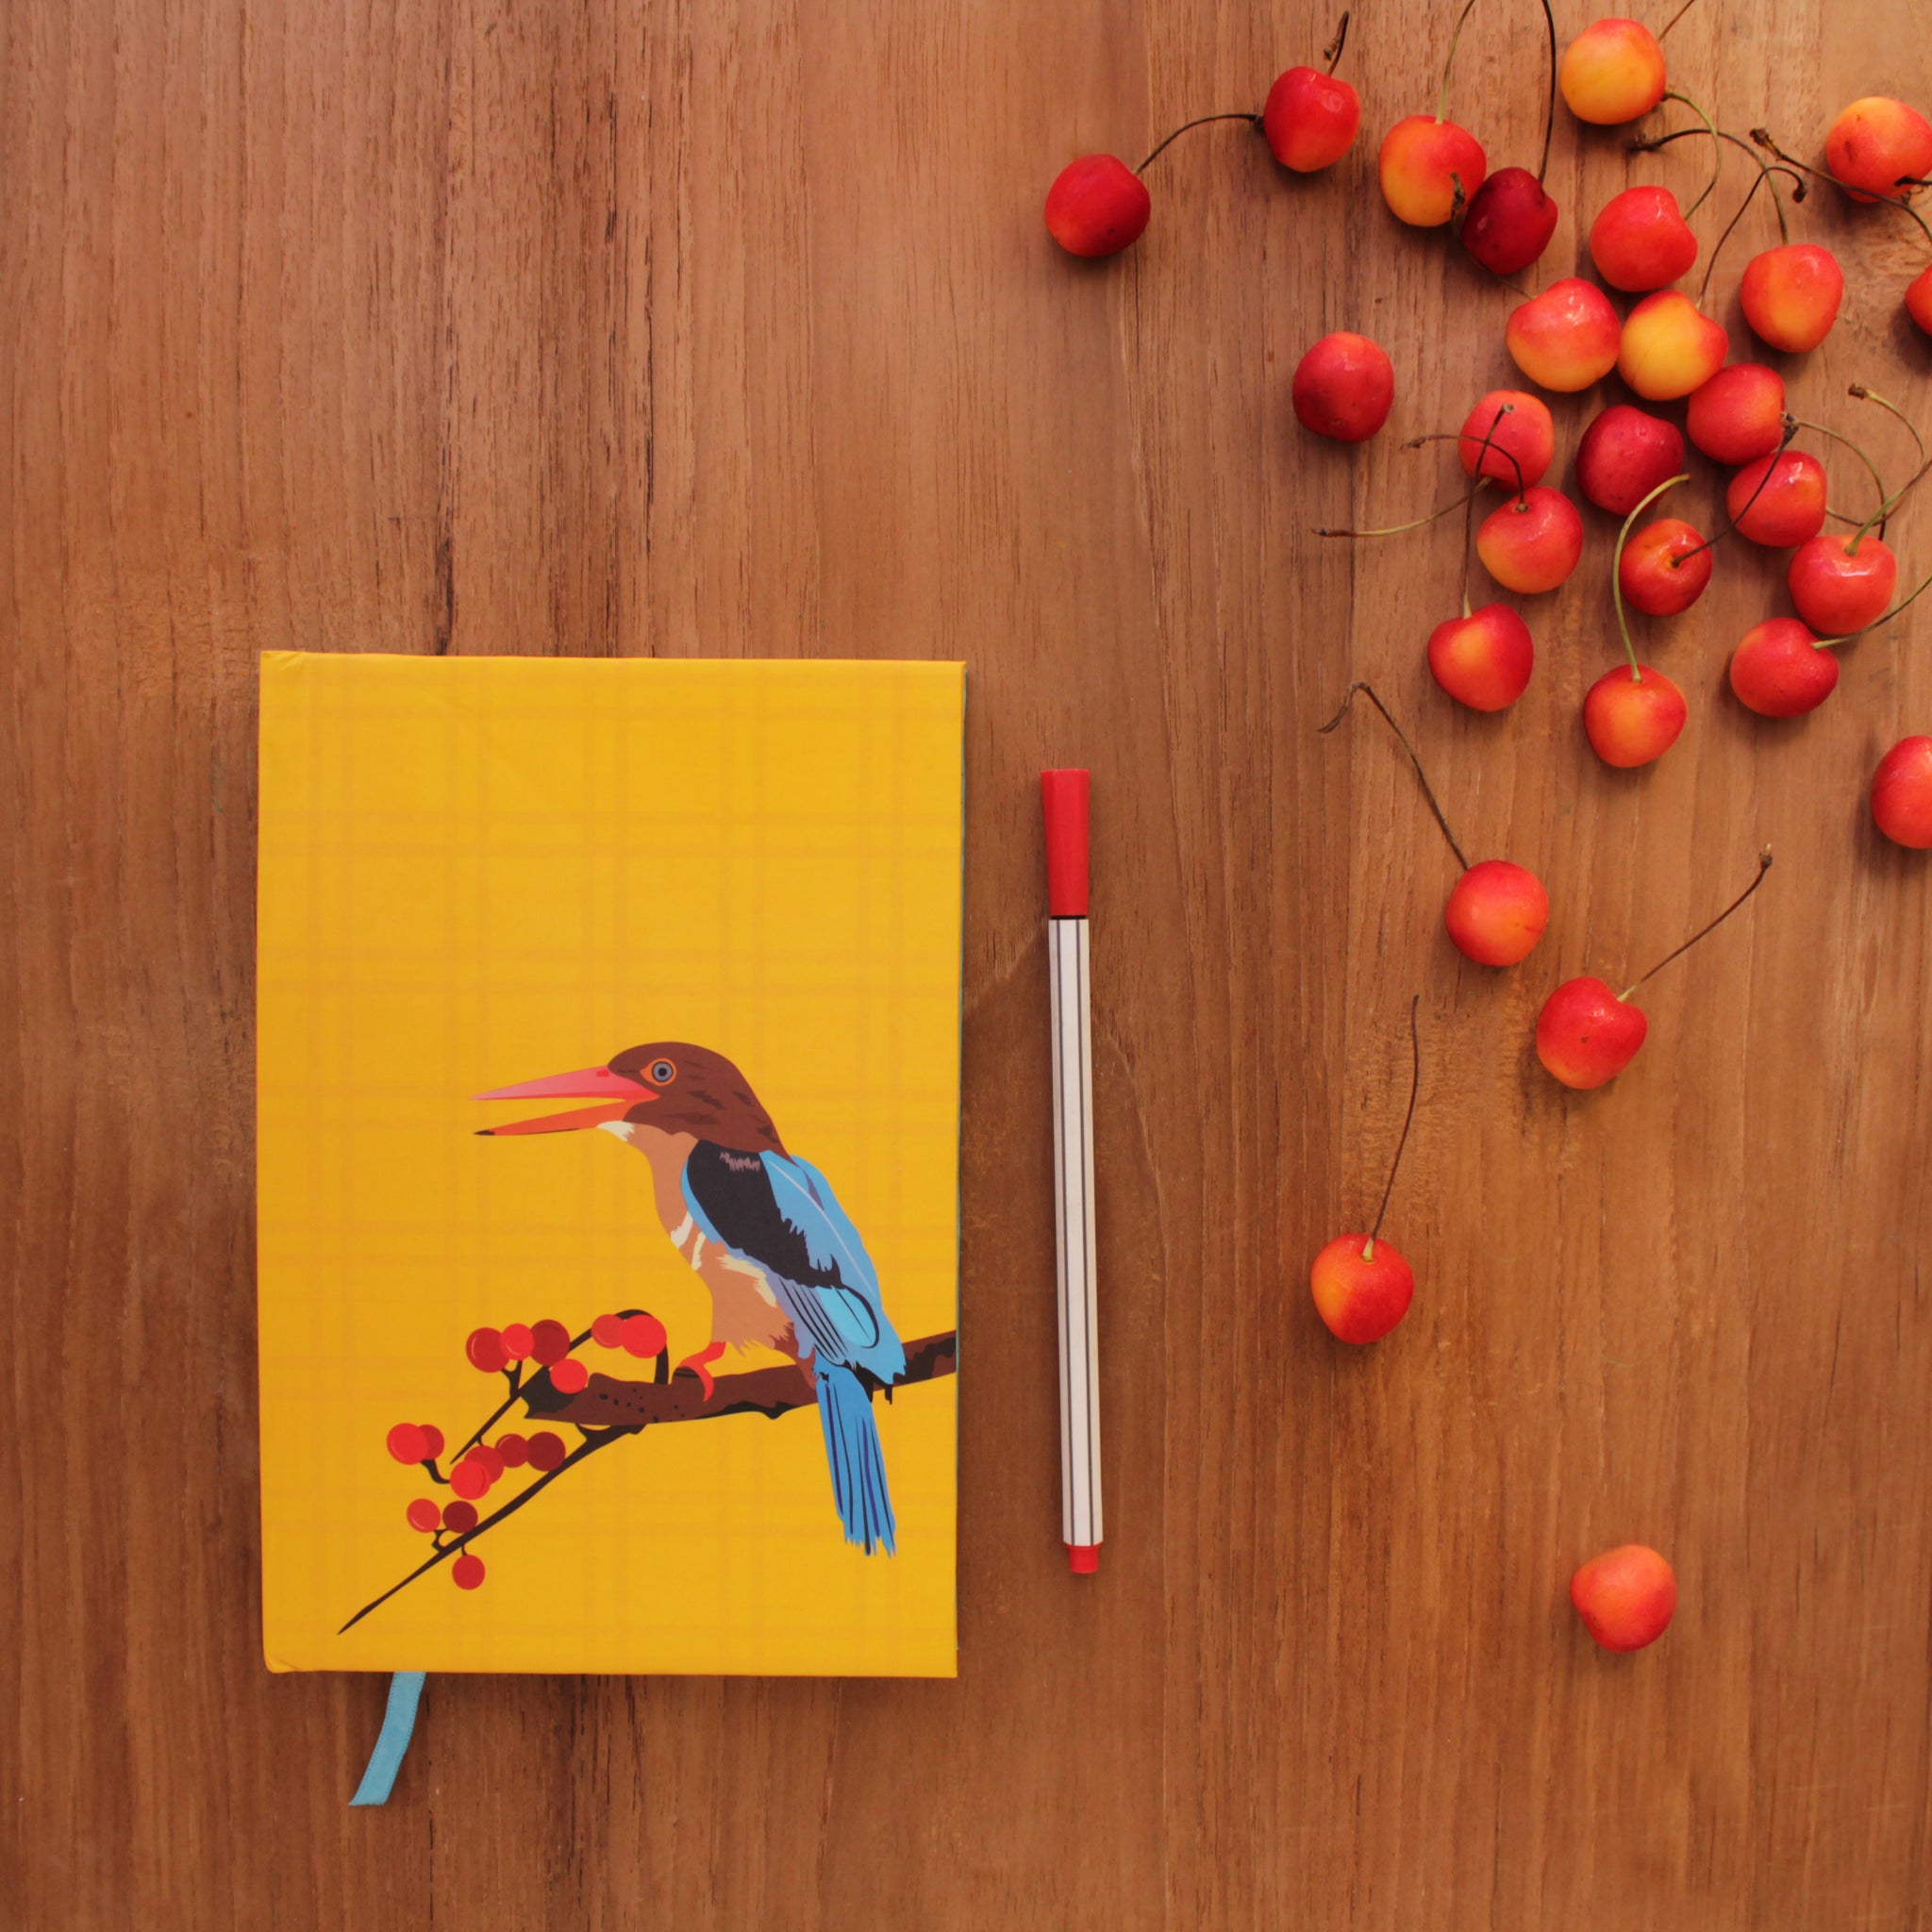 White-Throated Kingfisher of Arunachal Pradesh Notebook - NEST by Arpit Agarwal